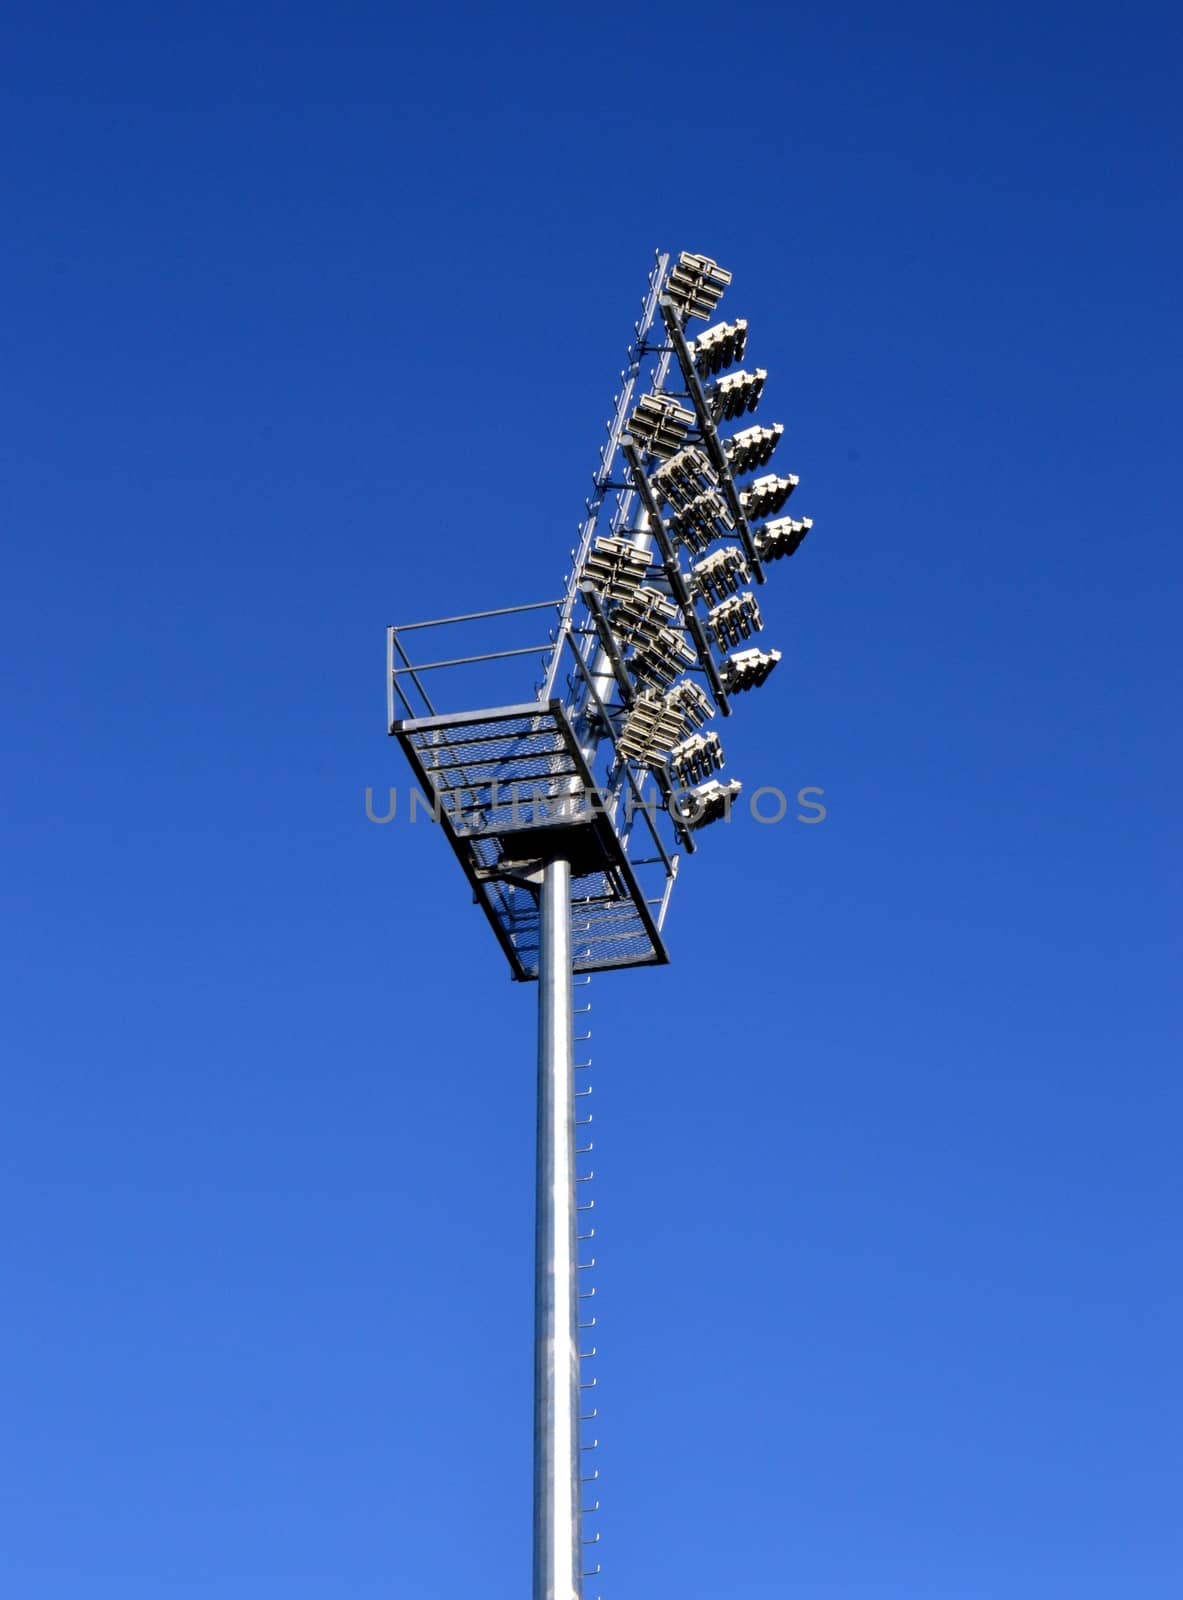 Lighting pylon of a football field  by Philou1000